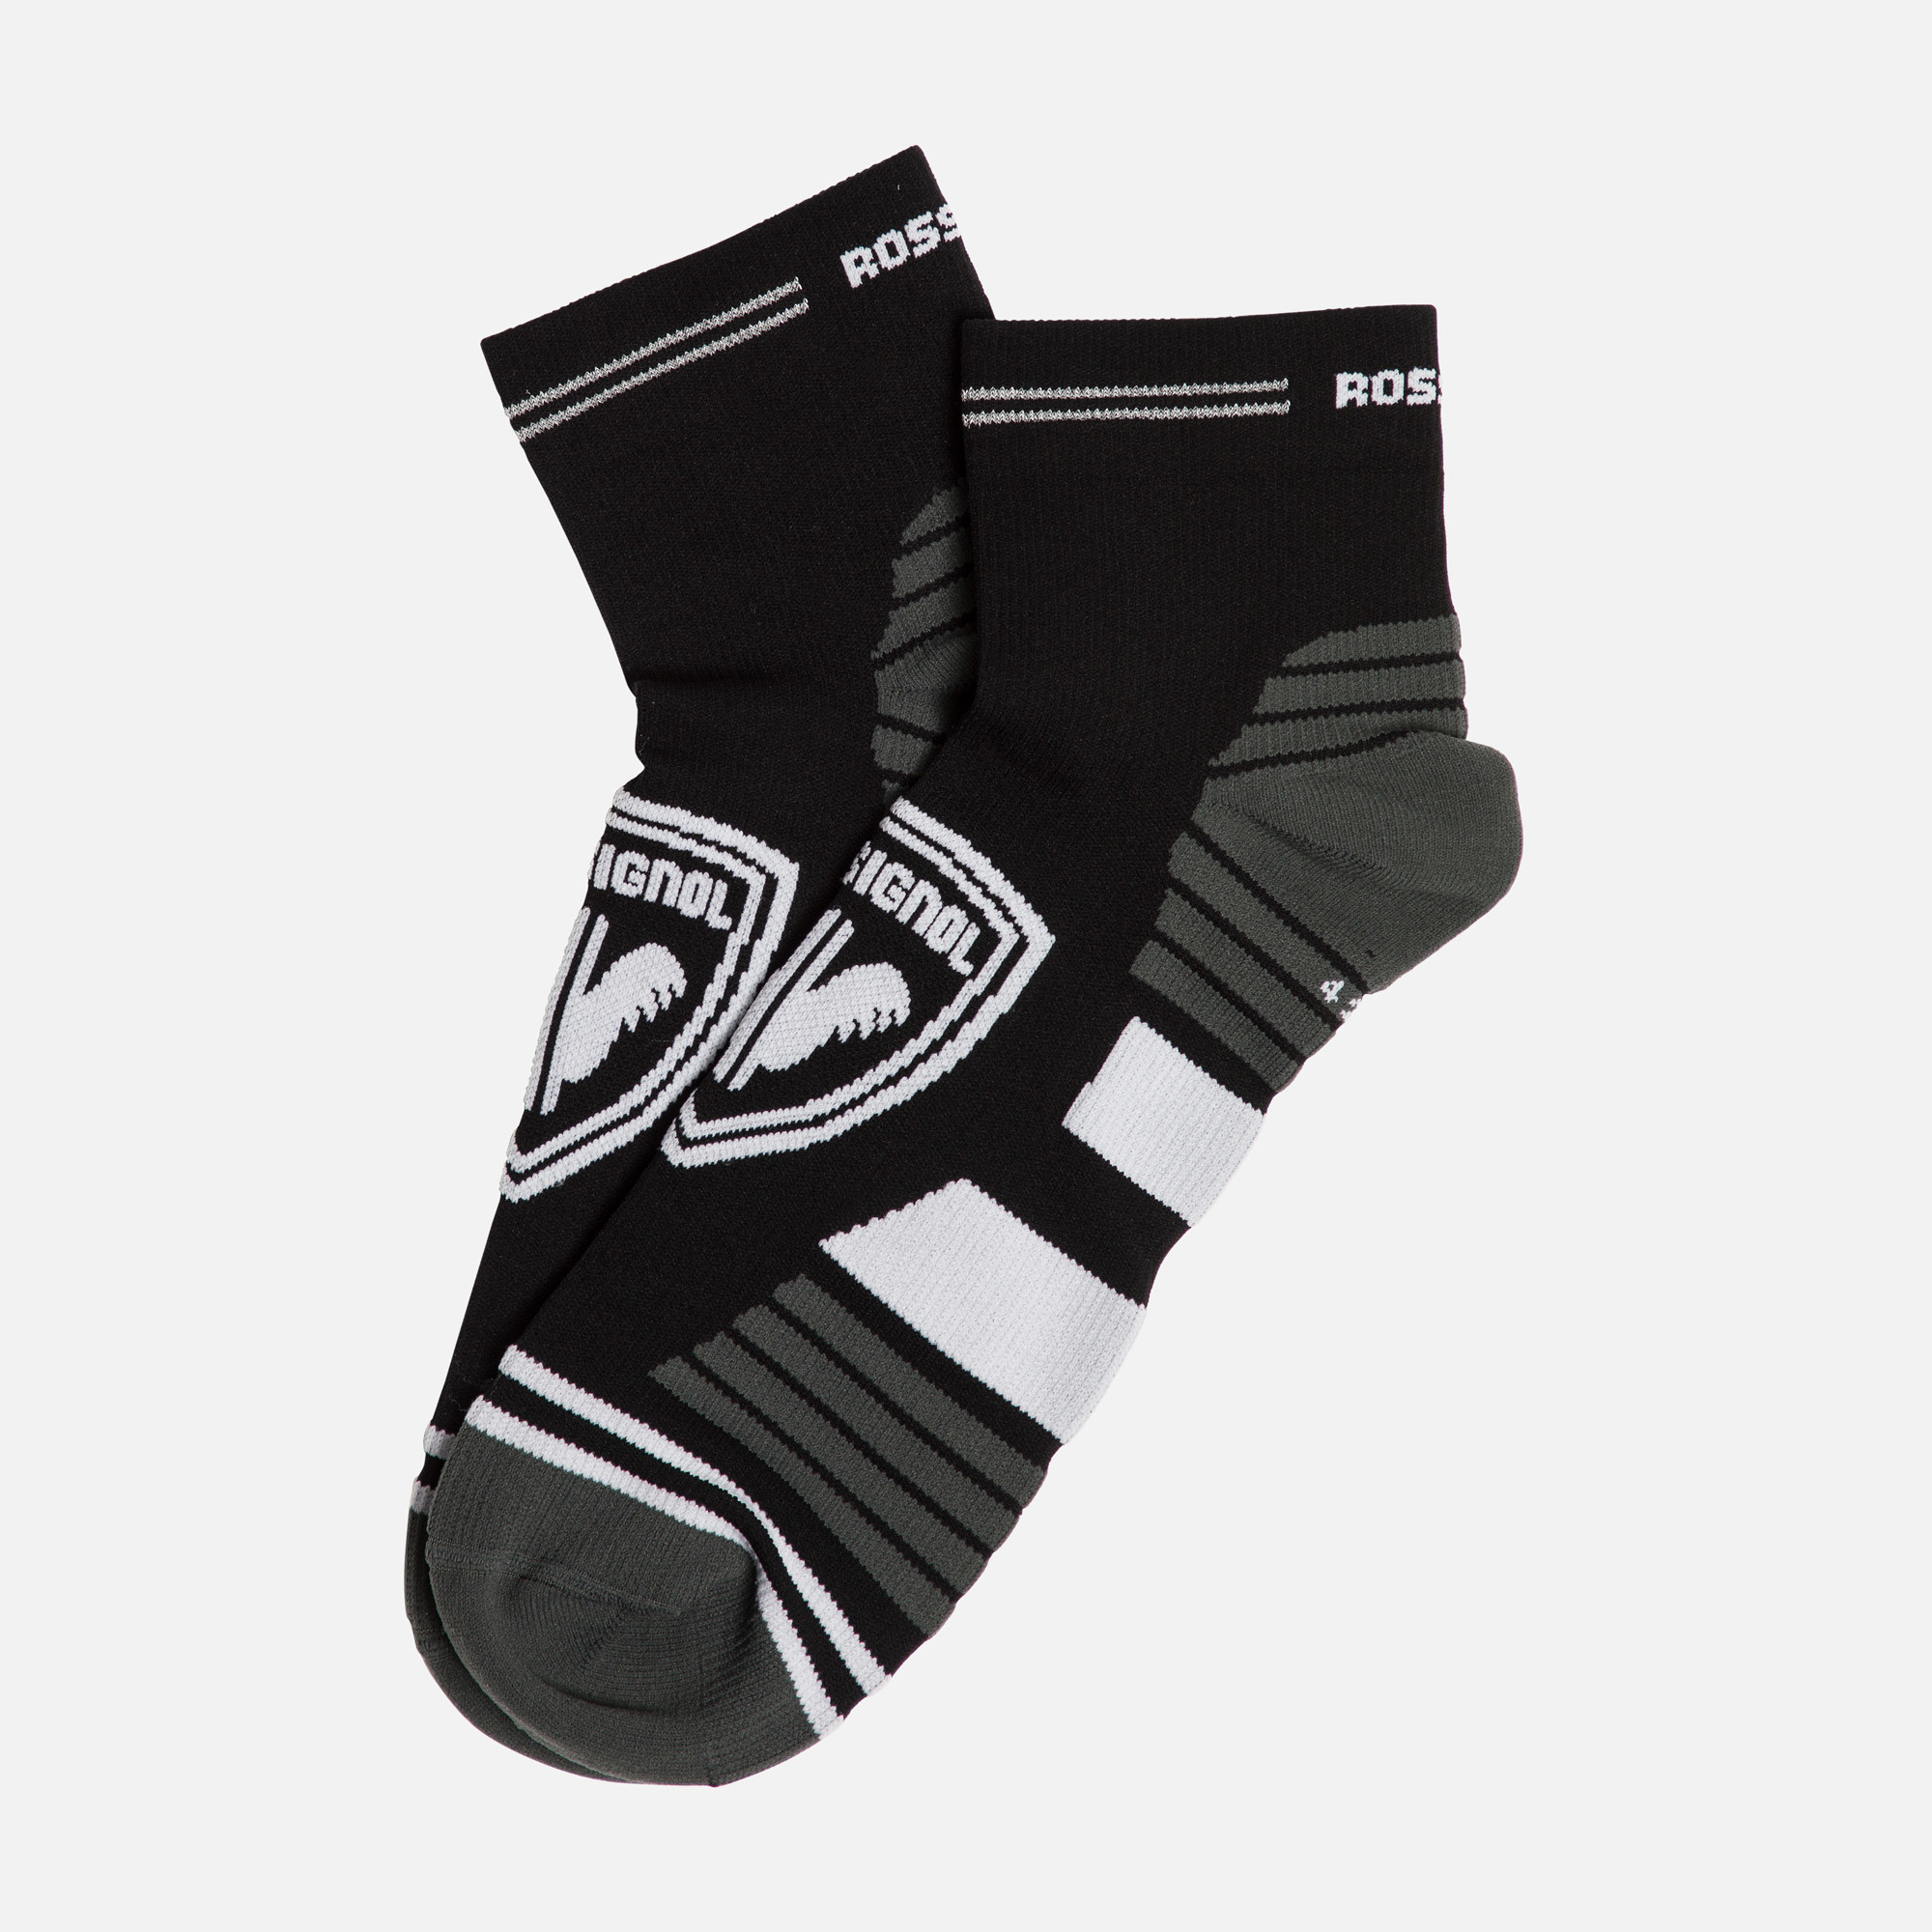 Men's cycling socks